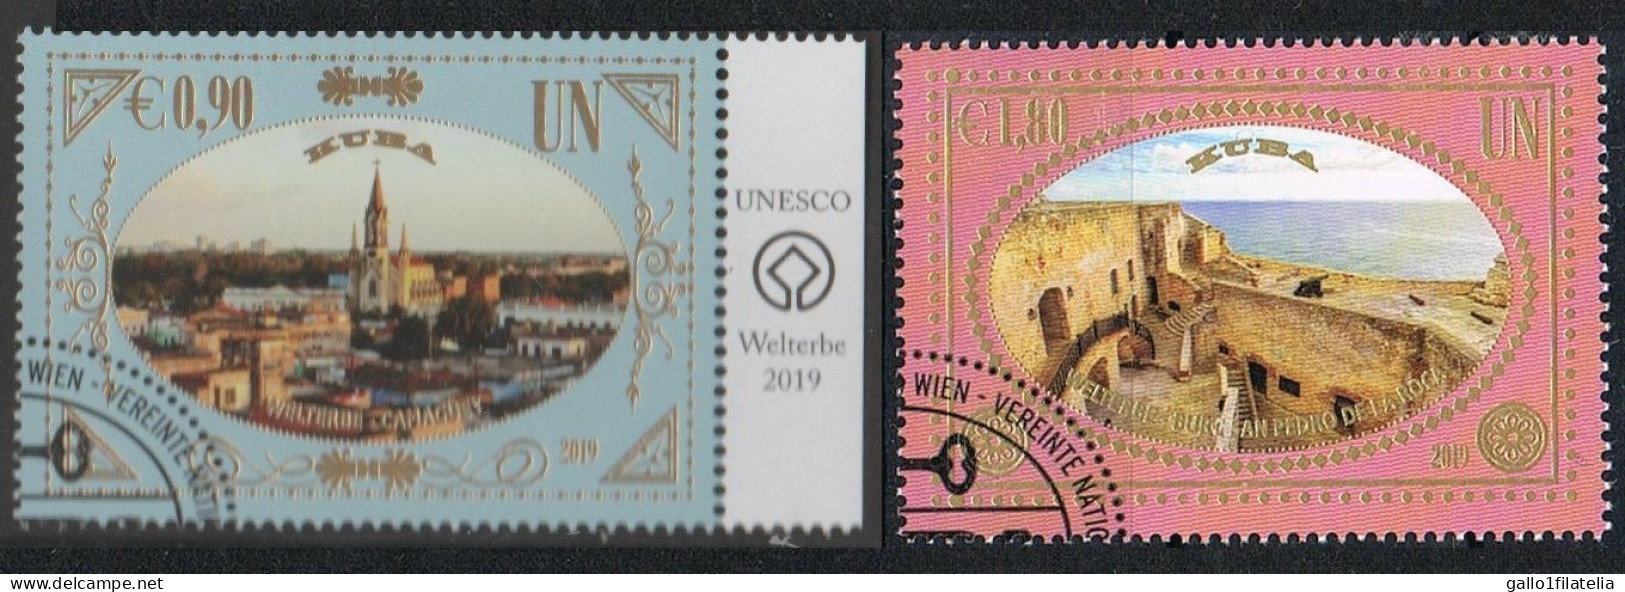 2019 - O.N.U. / UNITED NATIONS - VIENNA / WIEN - CUBA - PATRIMONIO UNESCO / UNESCO WORLD HERITAGE. USATO - Gebruikt